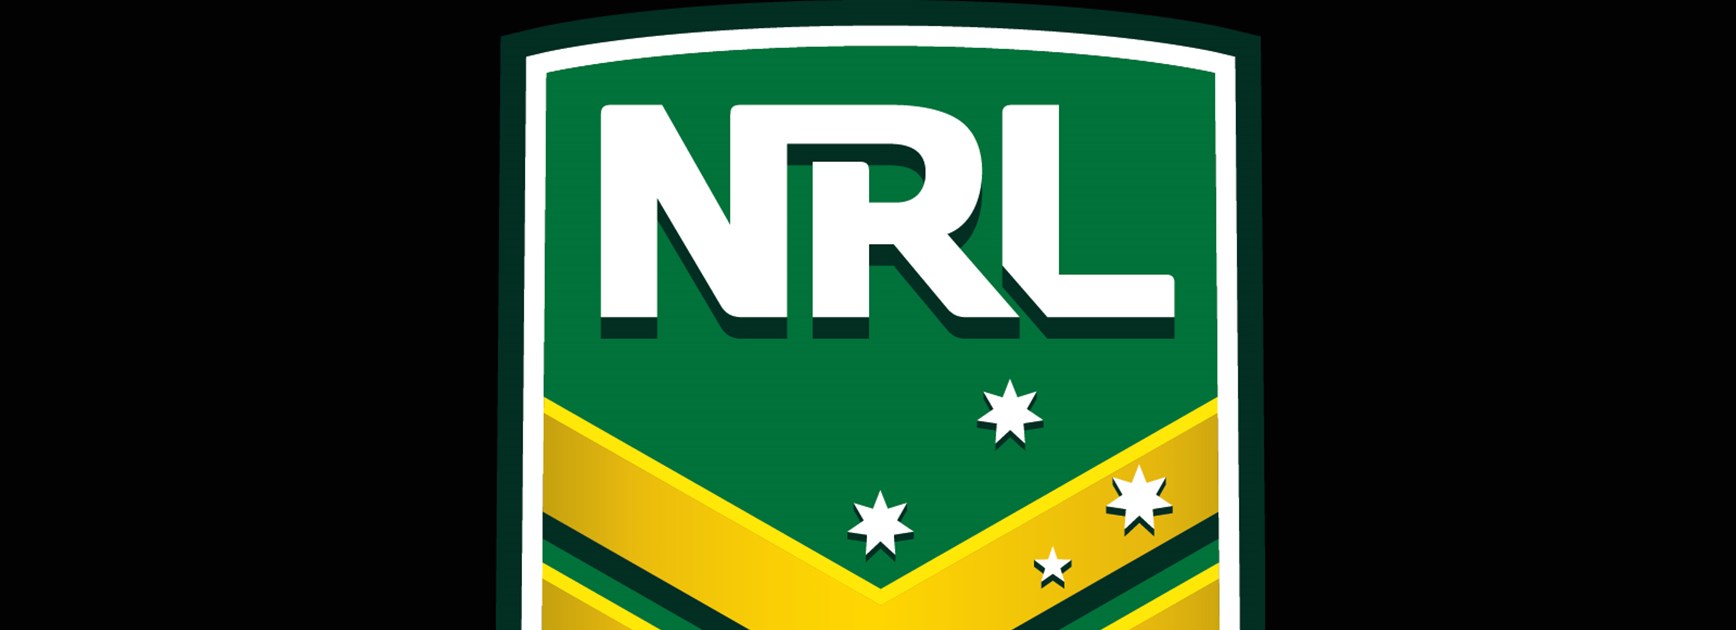 NRL logo on black background.